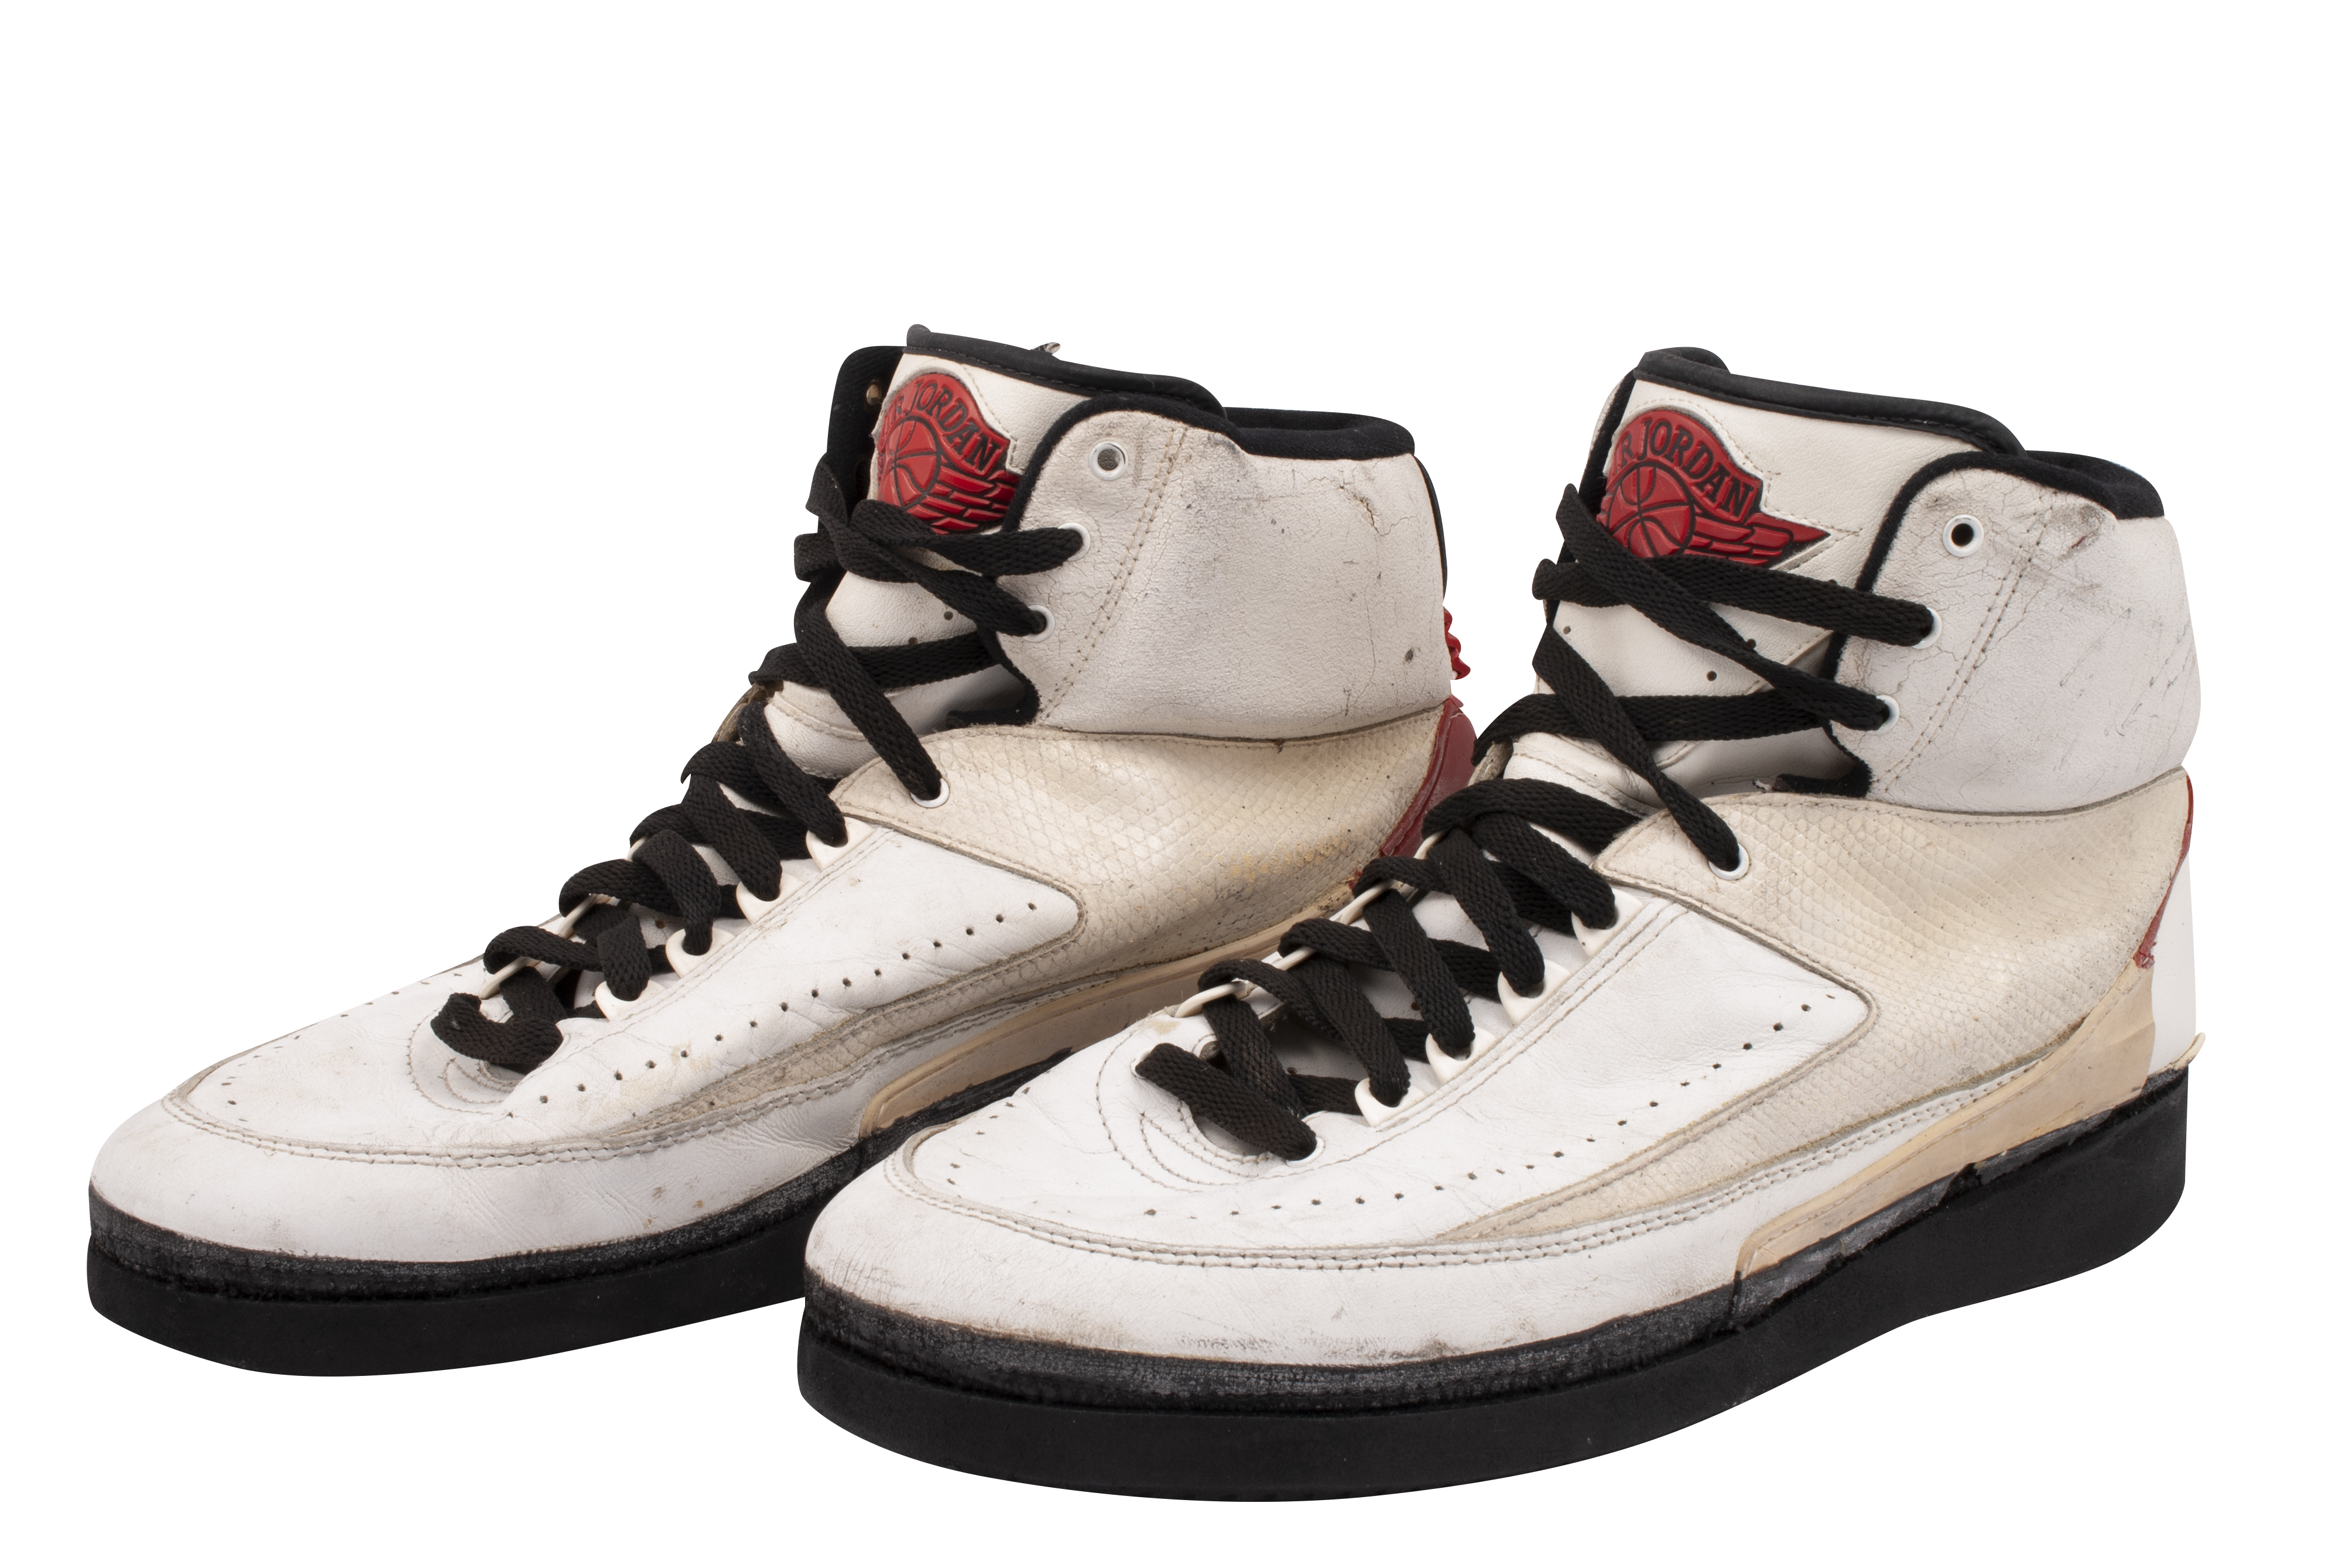 1986 jordan shoes